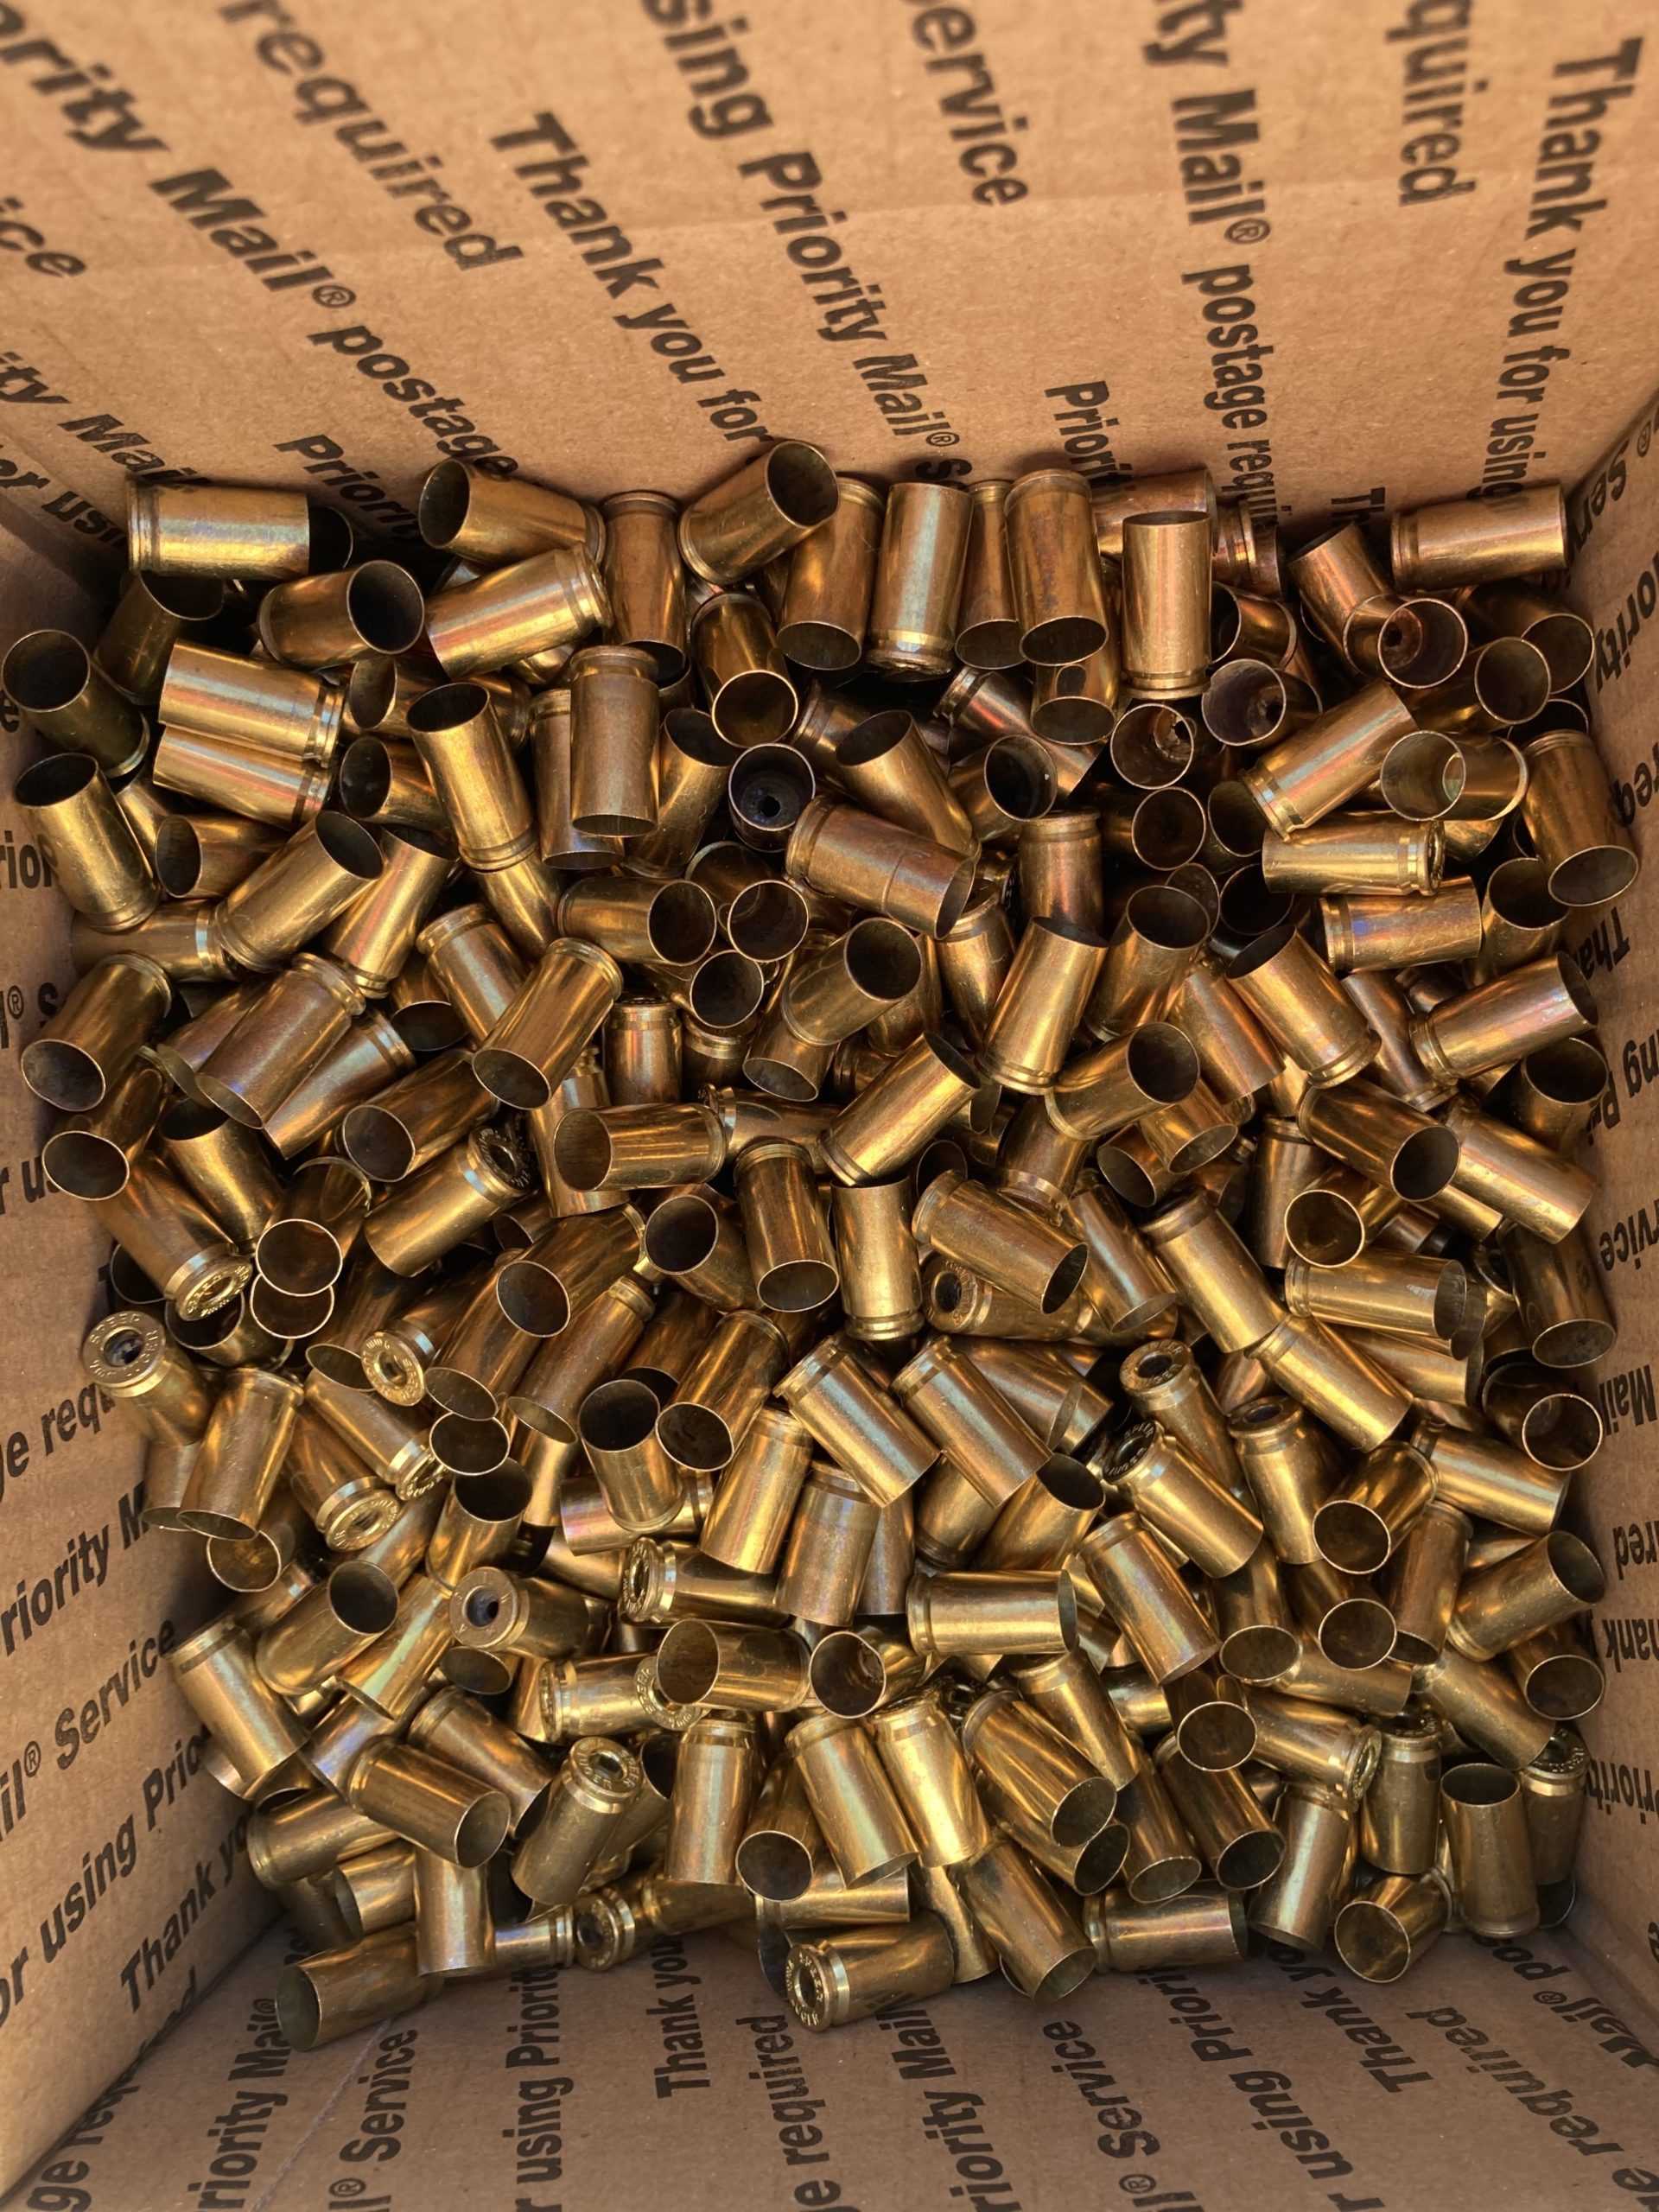 9mm – 1000 Deprimed and Cleaned – Used Range Brass – Sleeping Dog Ammo